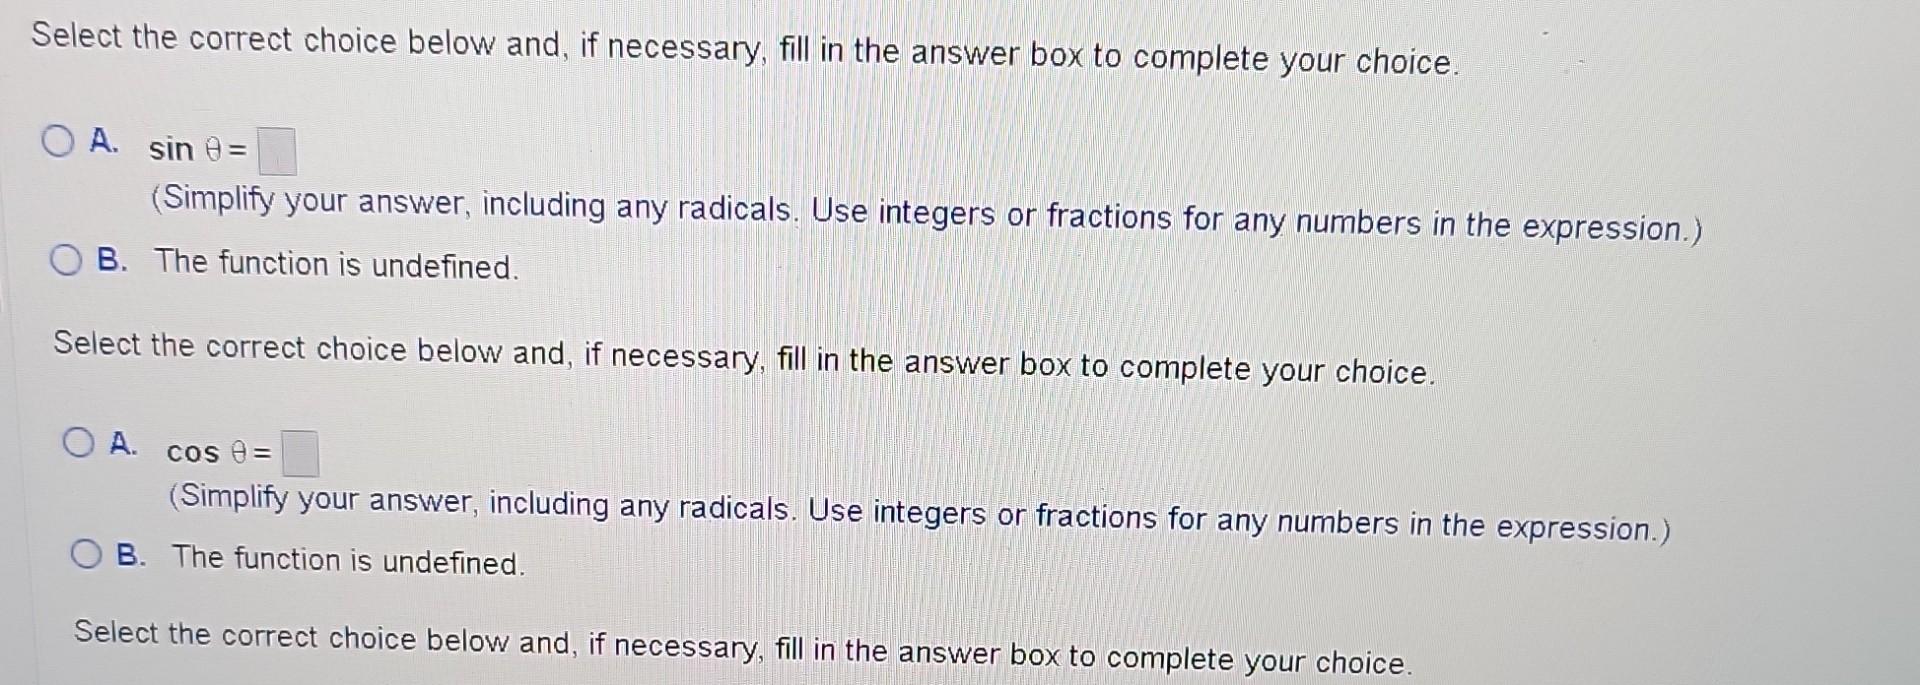 Reply Box Functionalities